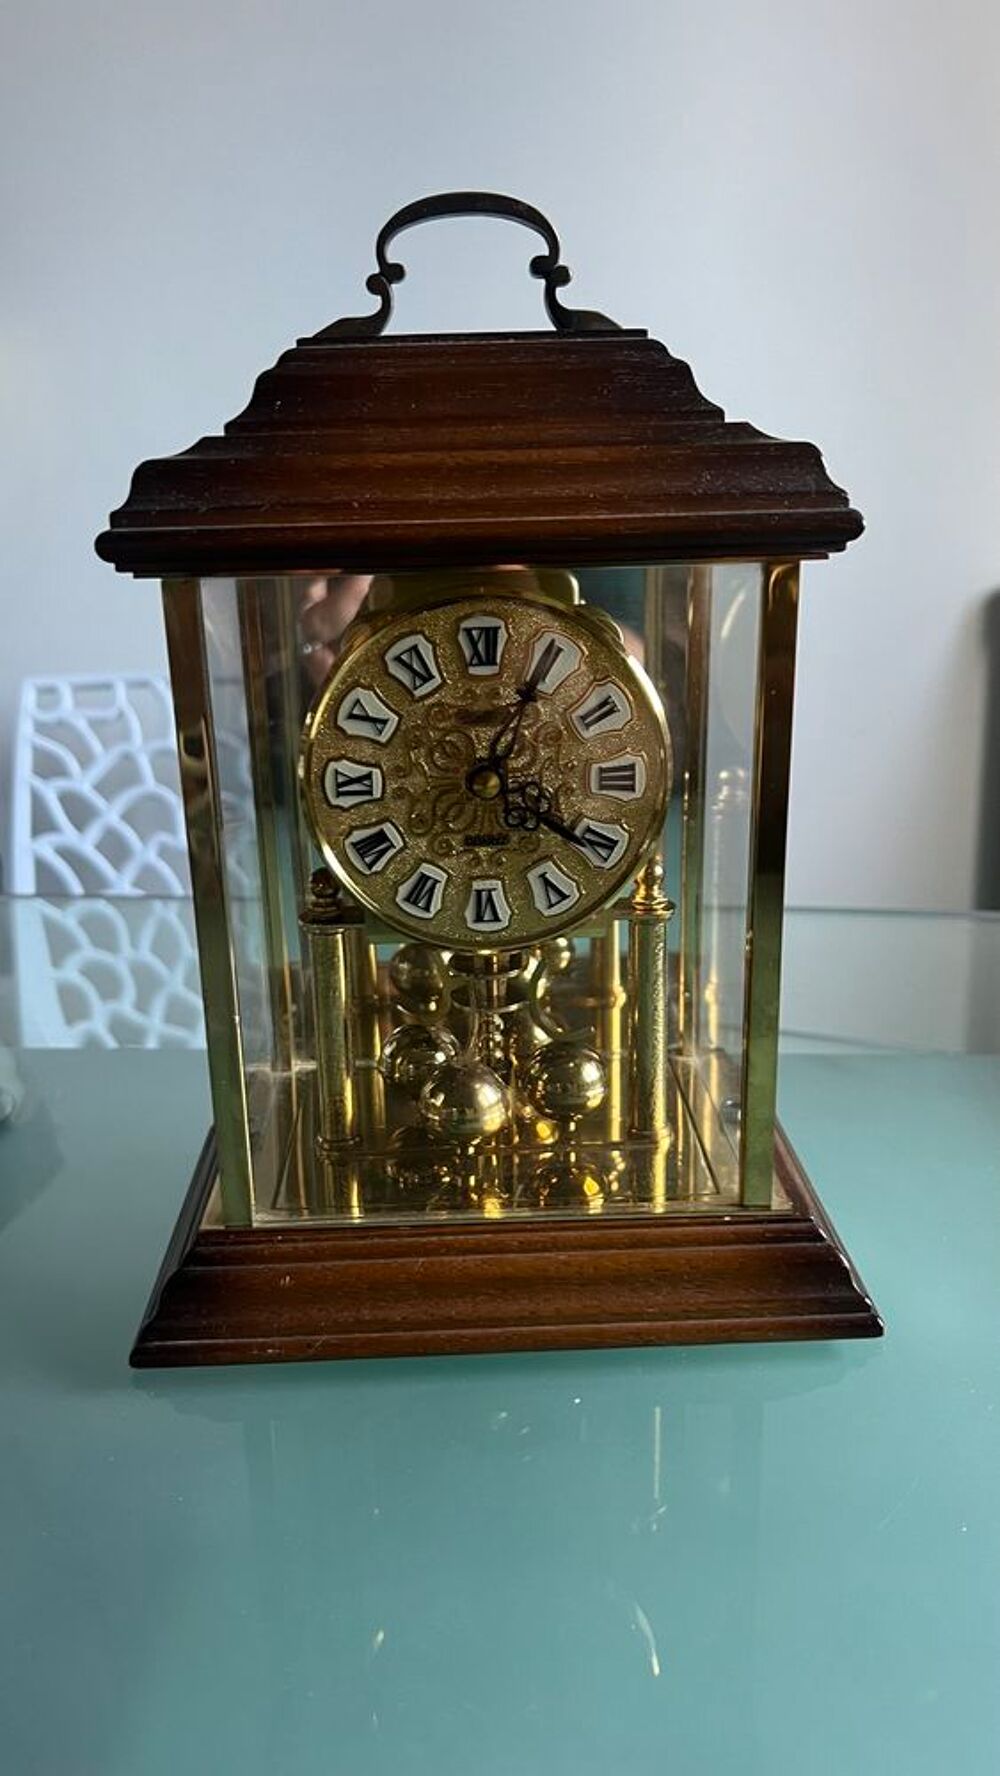 Horloge Haller
QUARIZ
MADE IN GERMANY Meubles